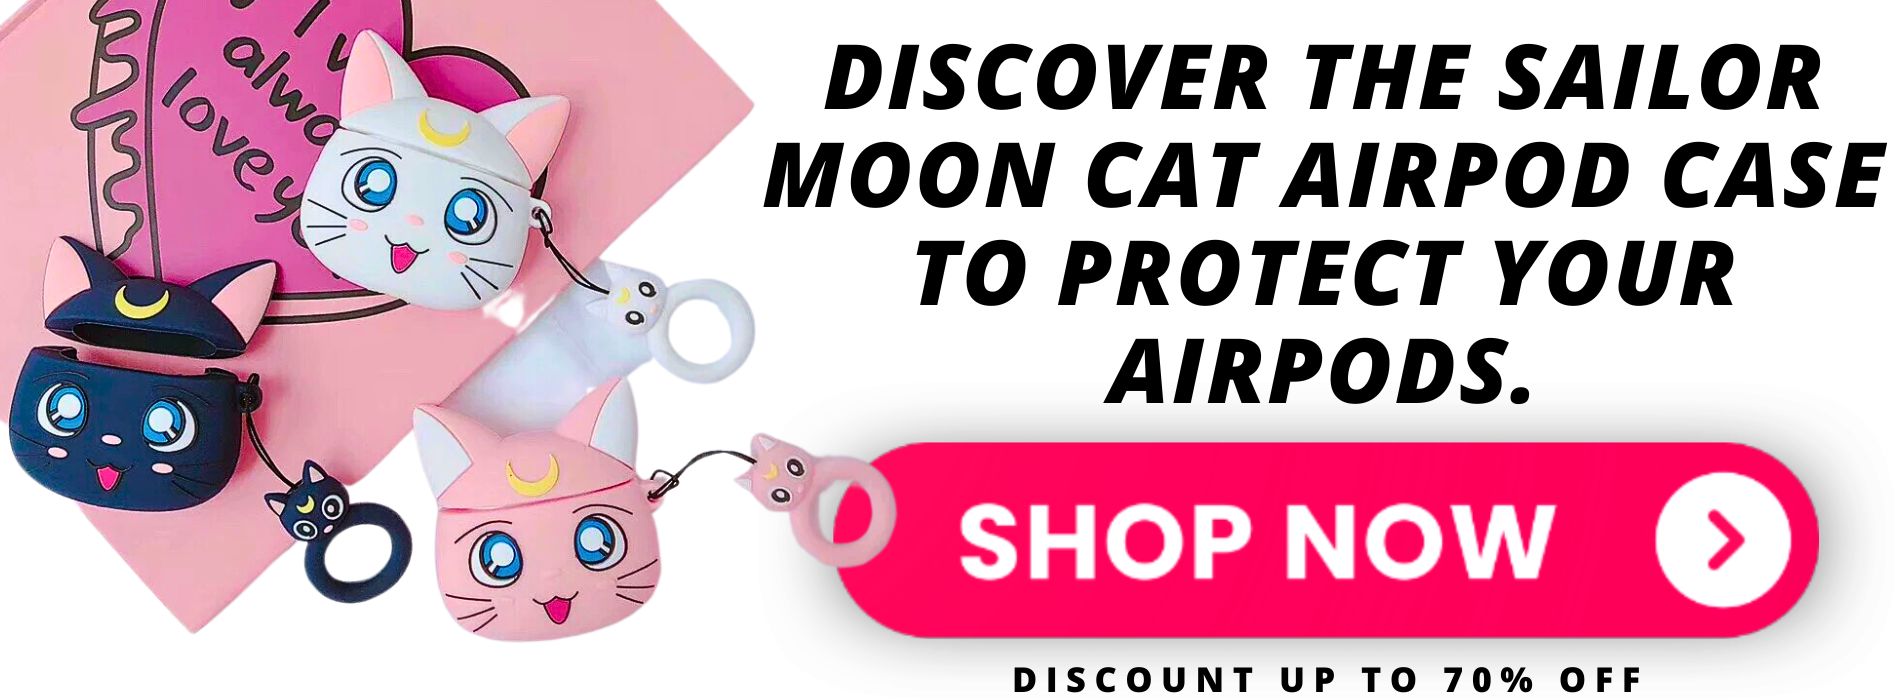 sailor-moon-cat-airpod-case